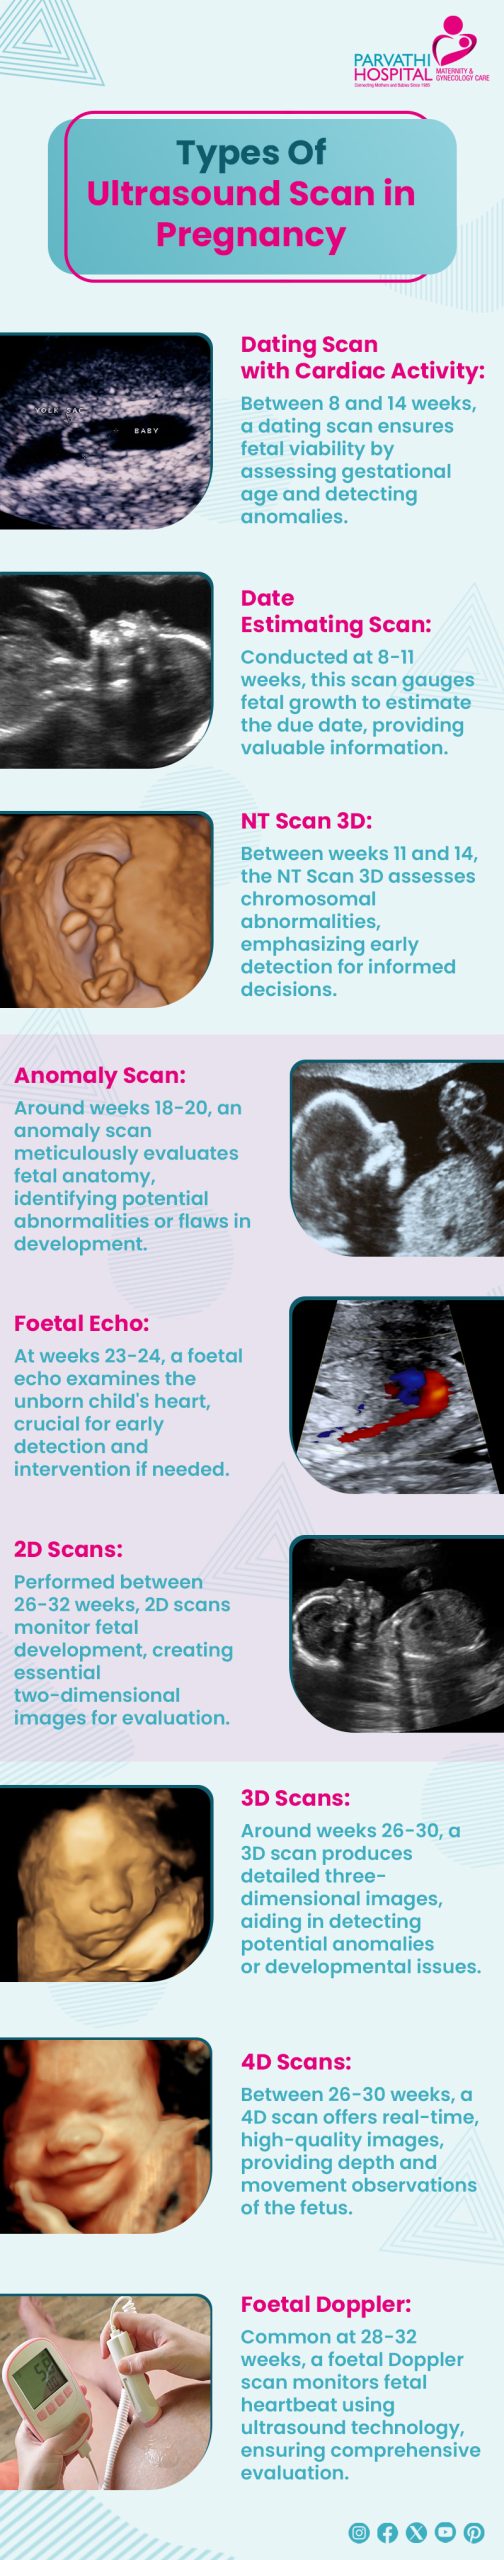 Ultrasound Scan in Pregnancy